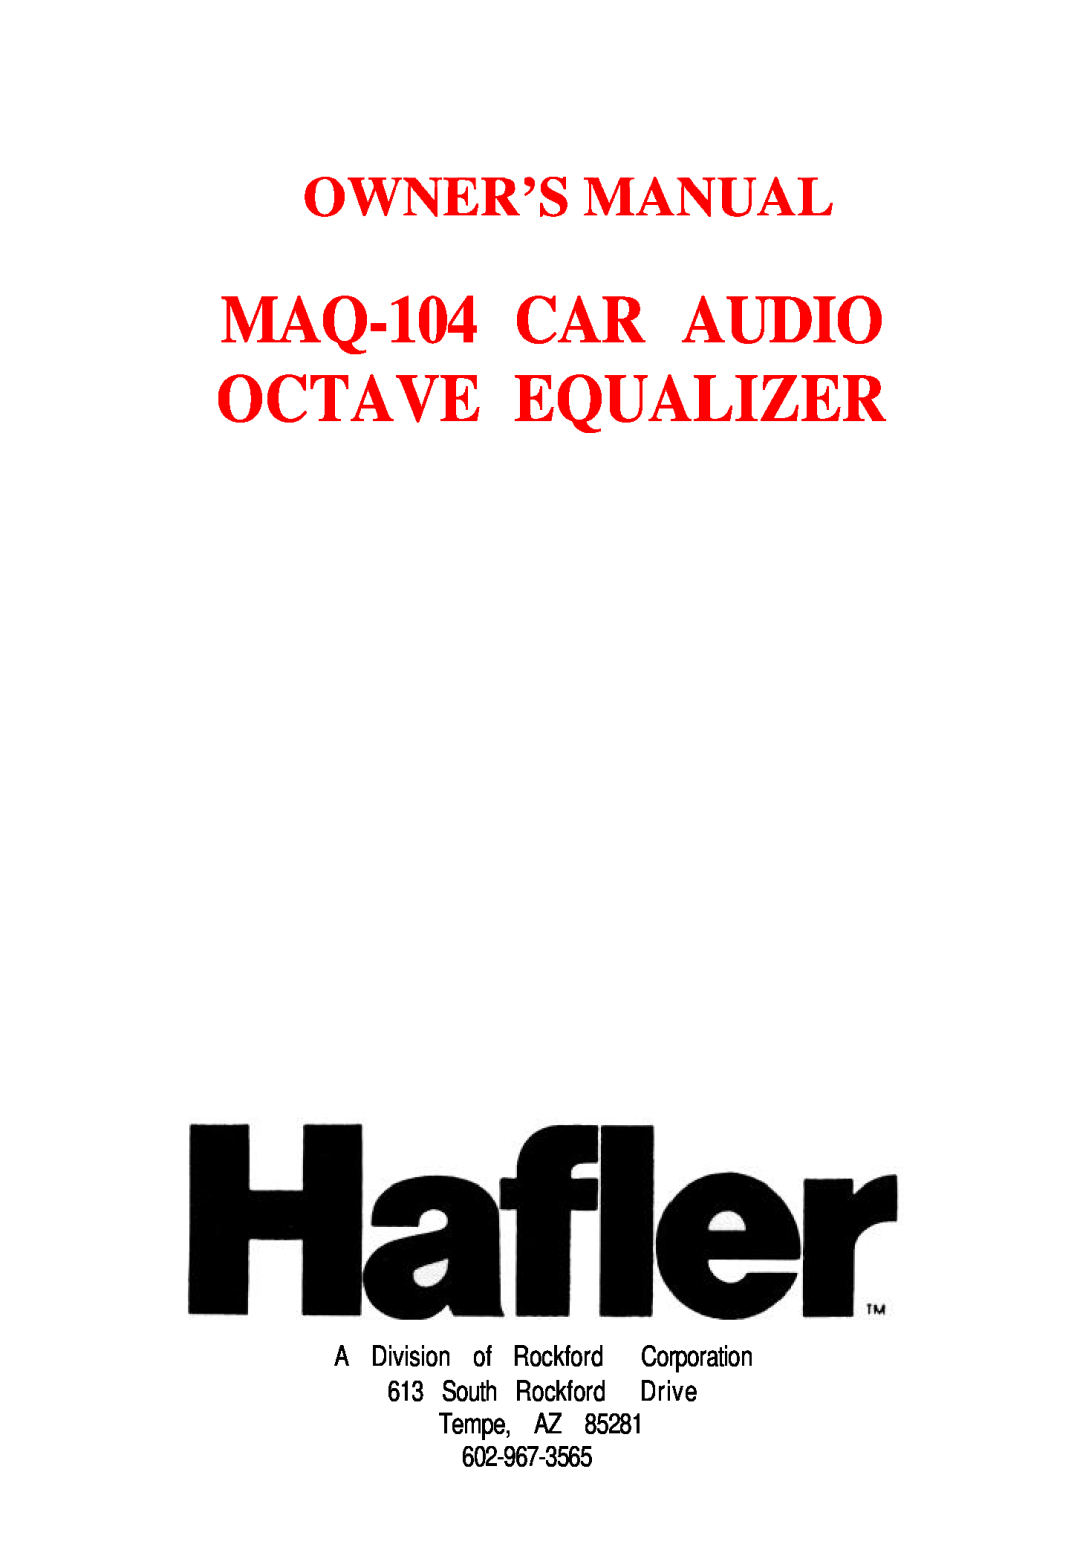 Hafler owner manual MAQ-104CAR AUDIO OCTAVE EQUALIZER 